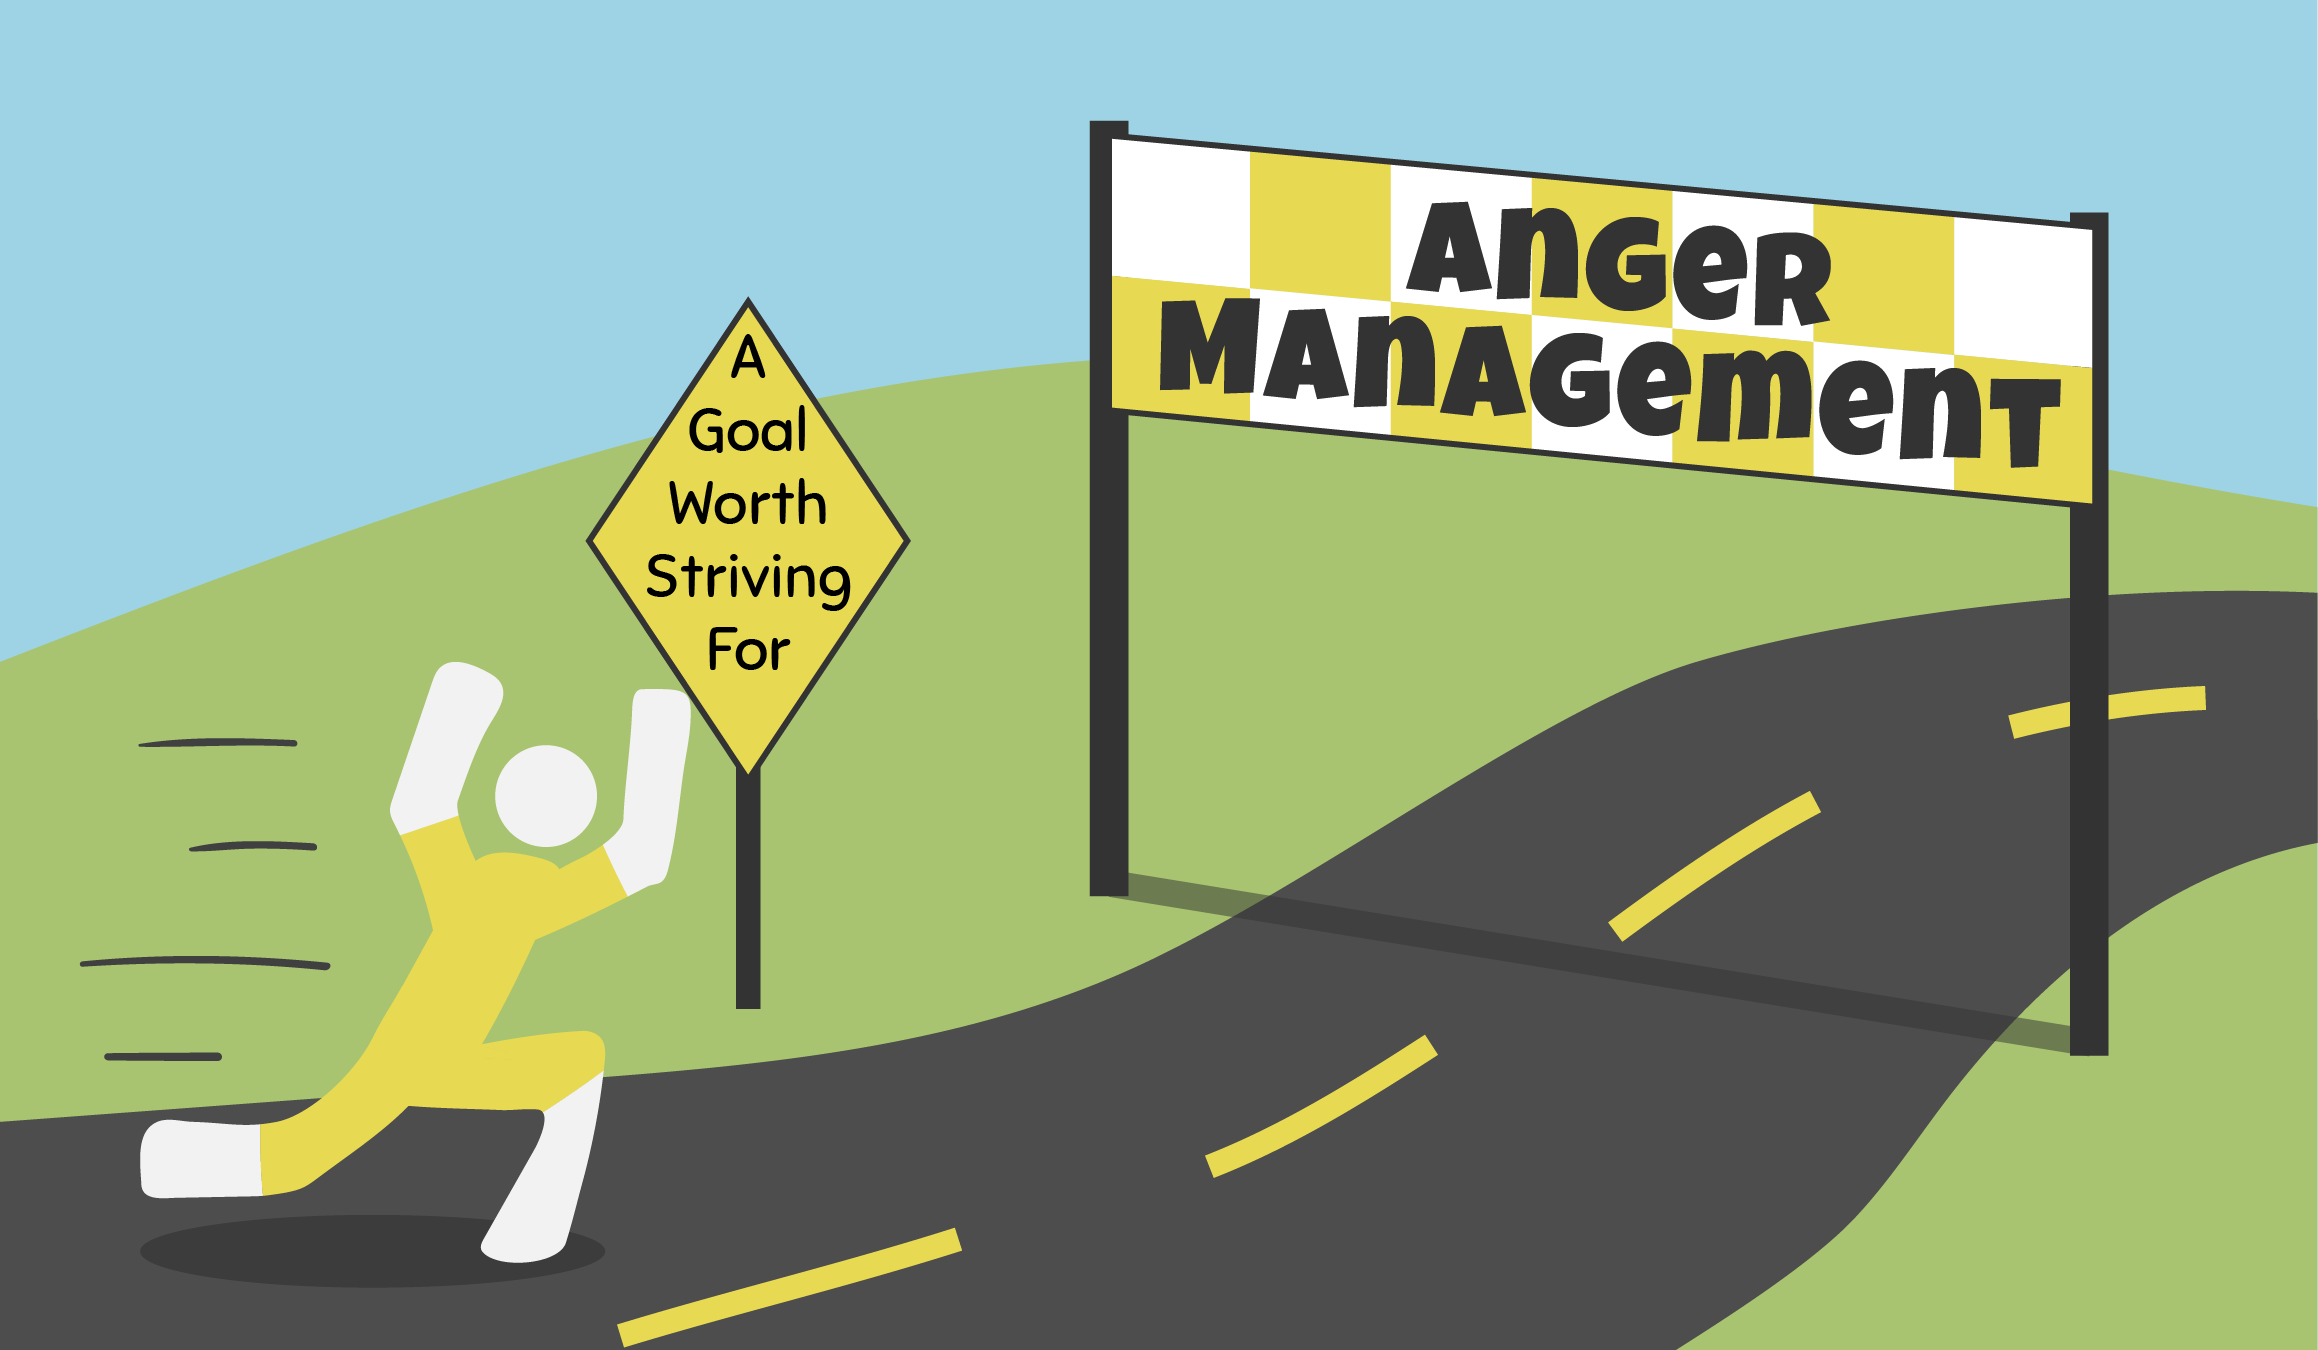 Anger Management-A Goal Worth Striving For